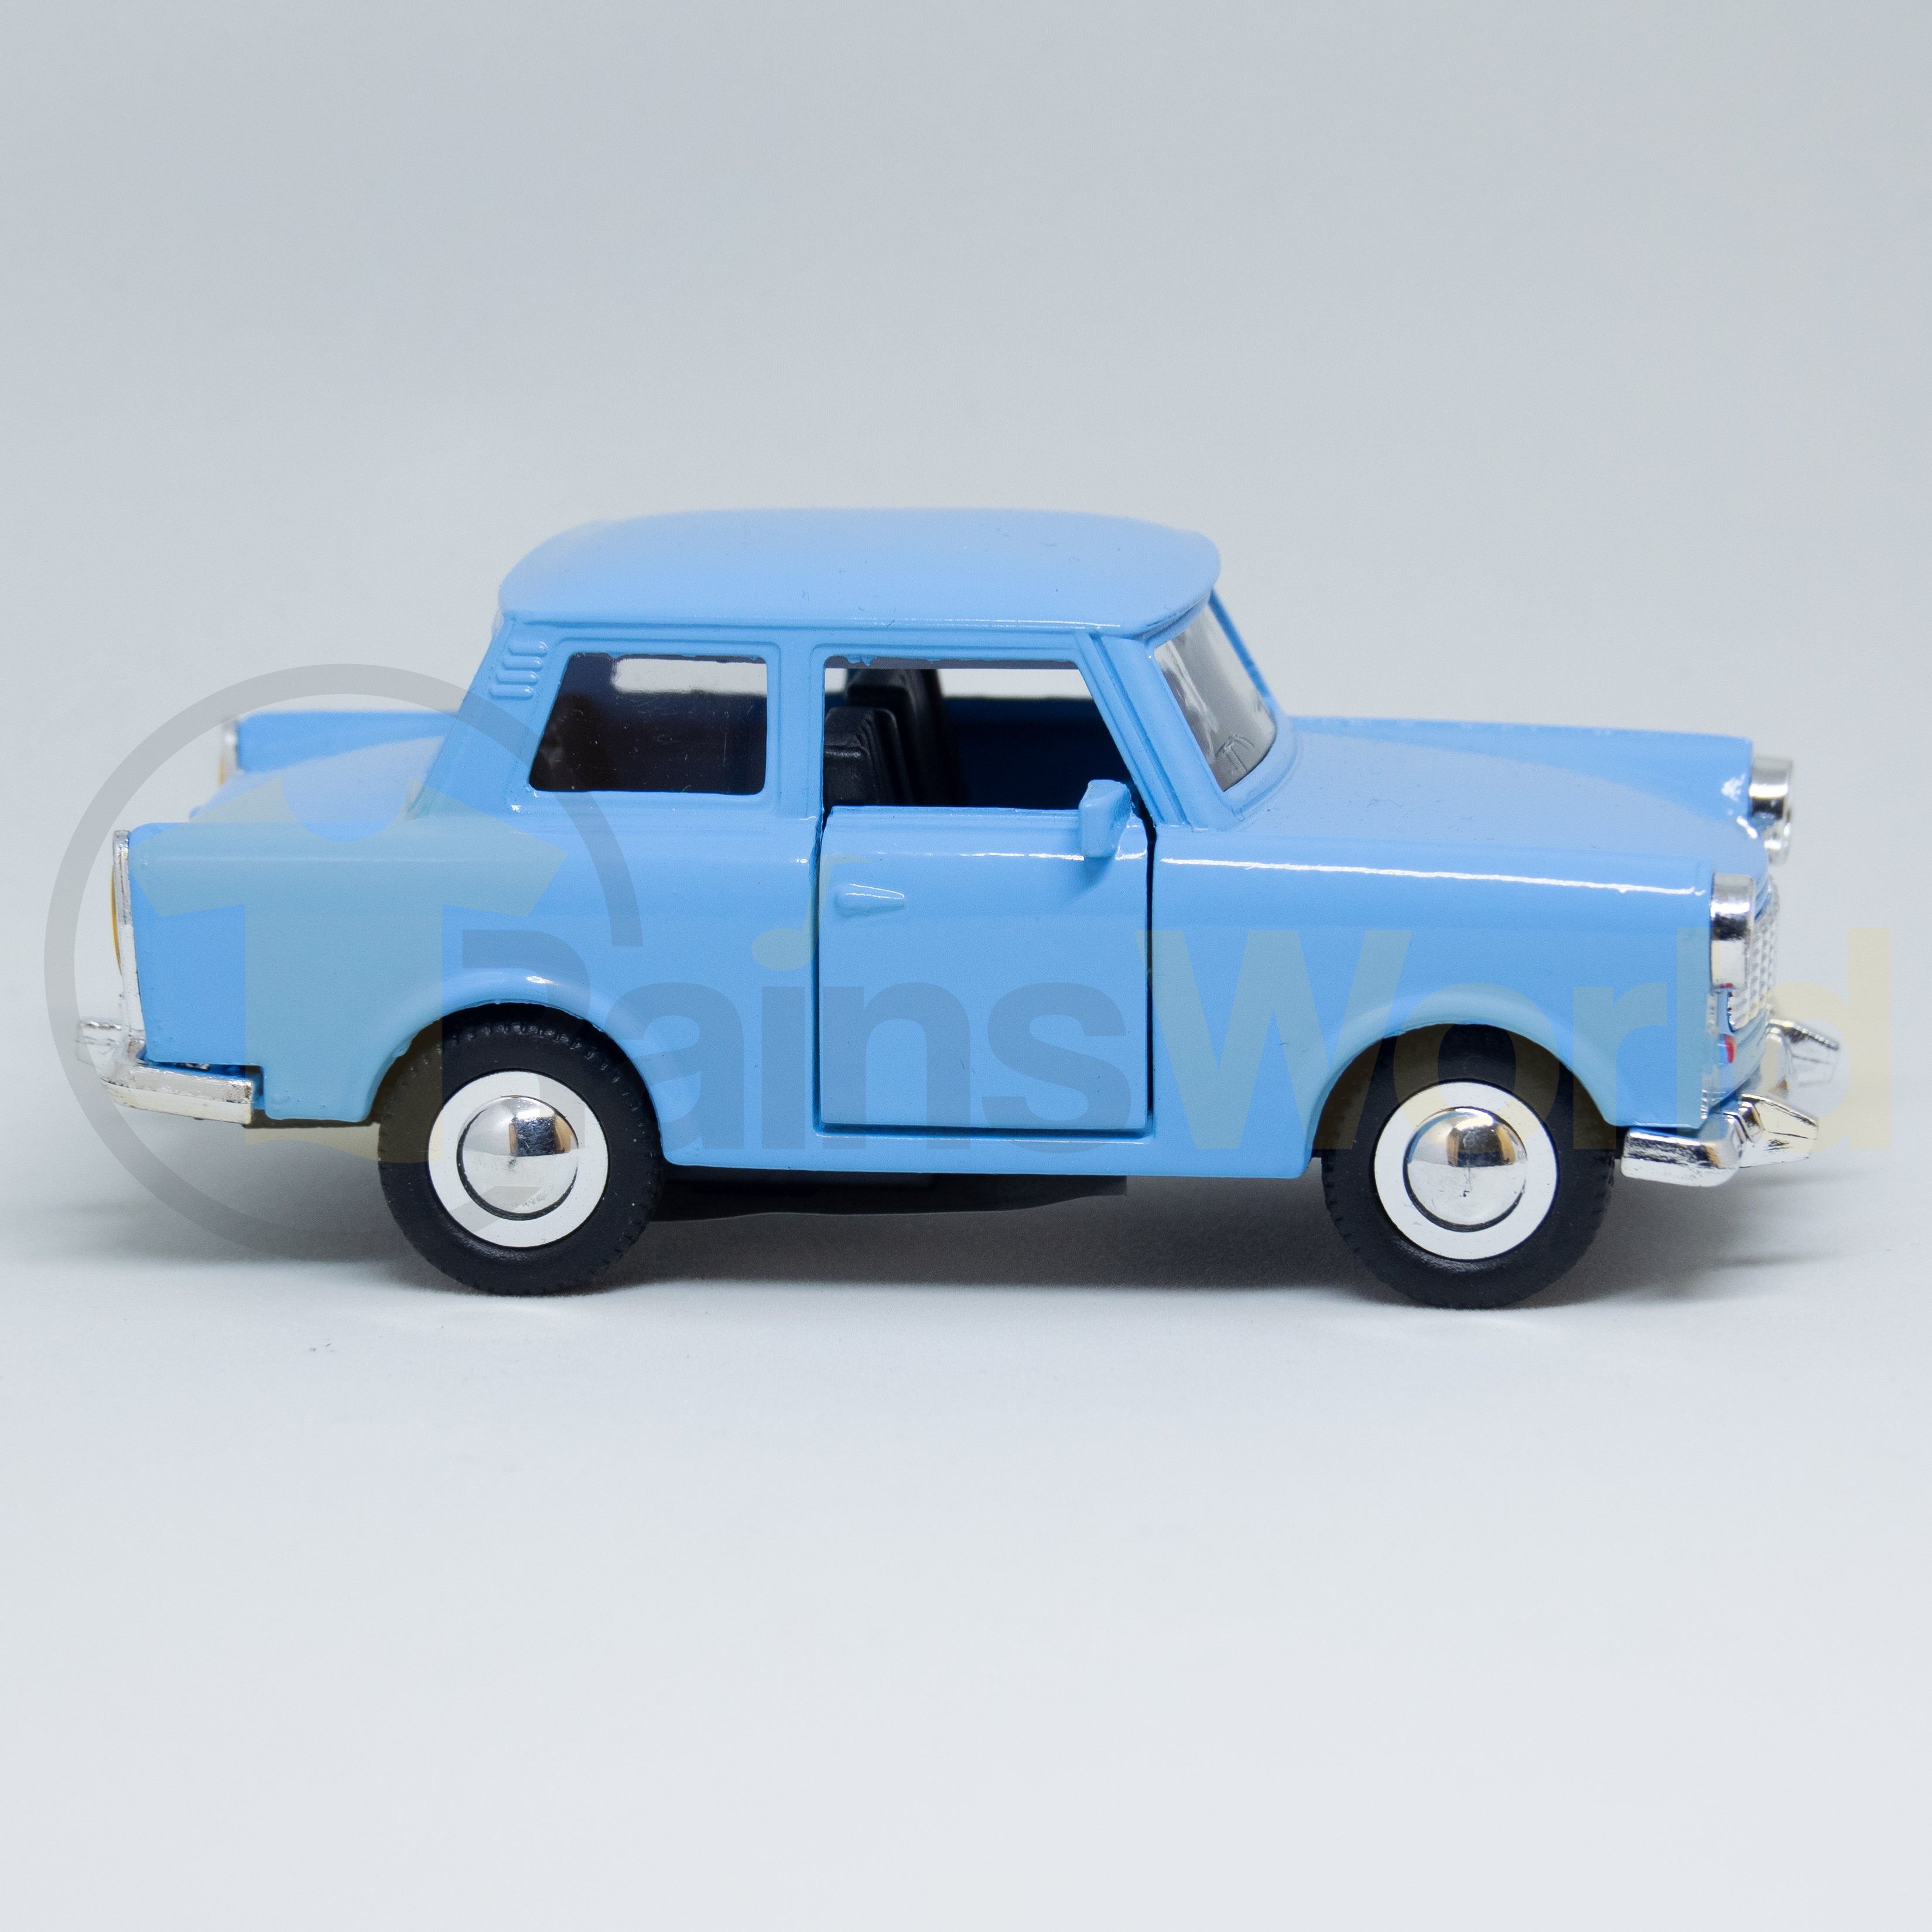 Trabant 601 Limousine Modellauto, himmelblau, 11cm lang, Aufziehfunktion, bewegliche Teile